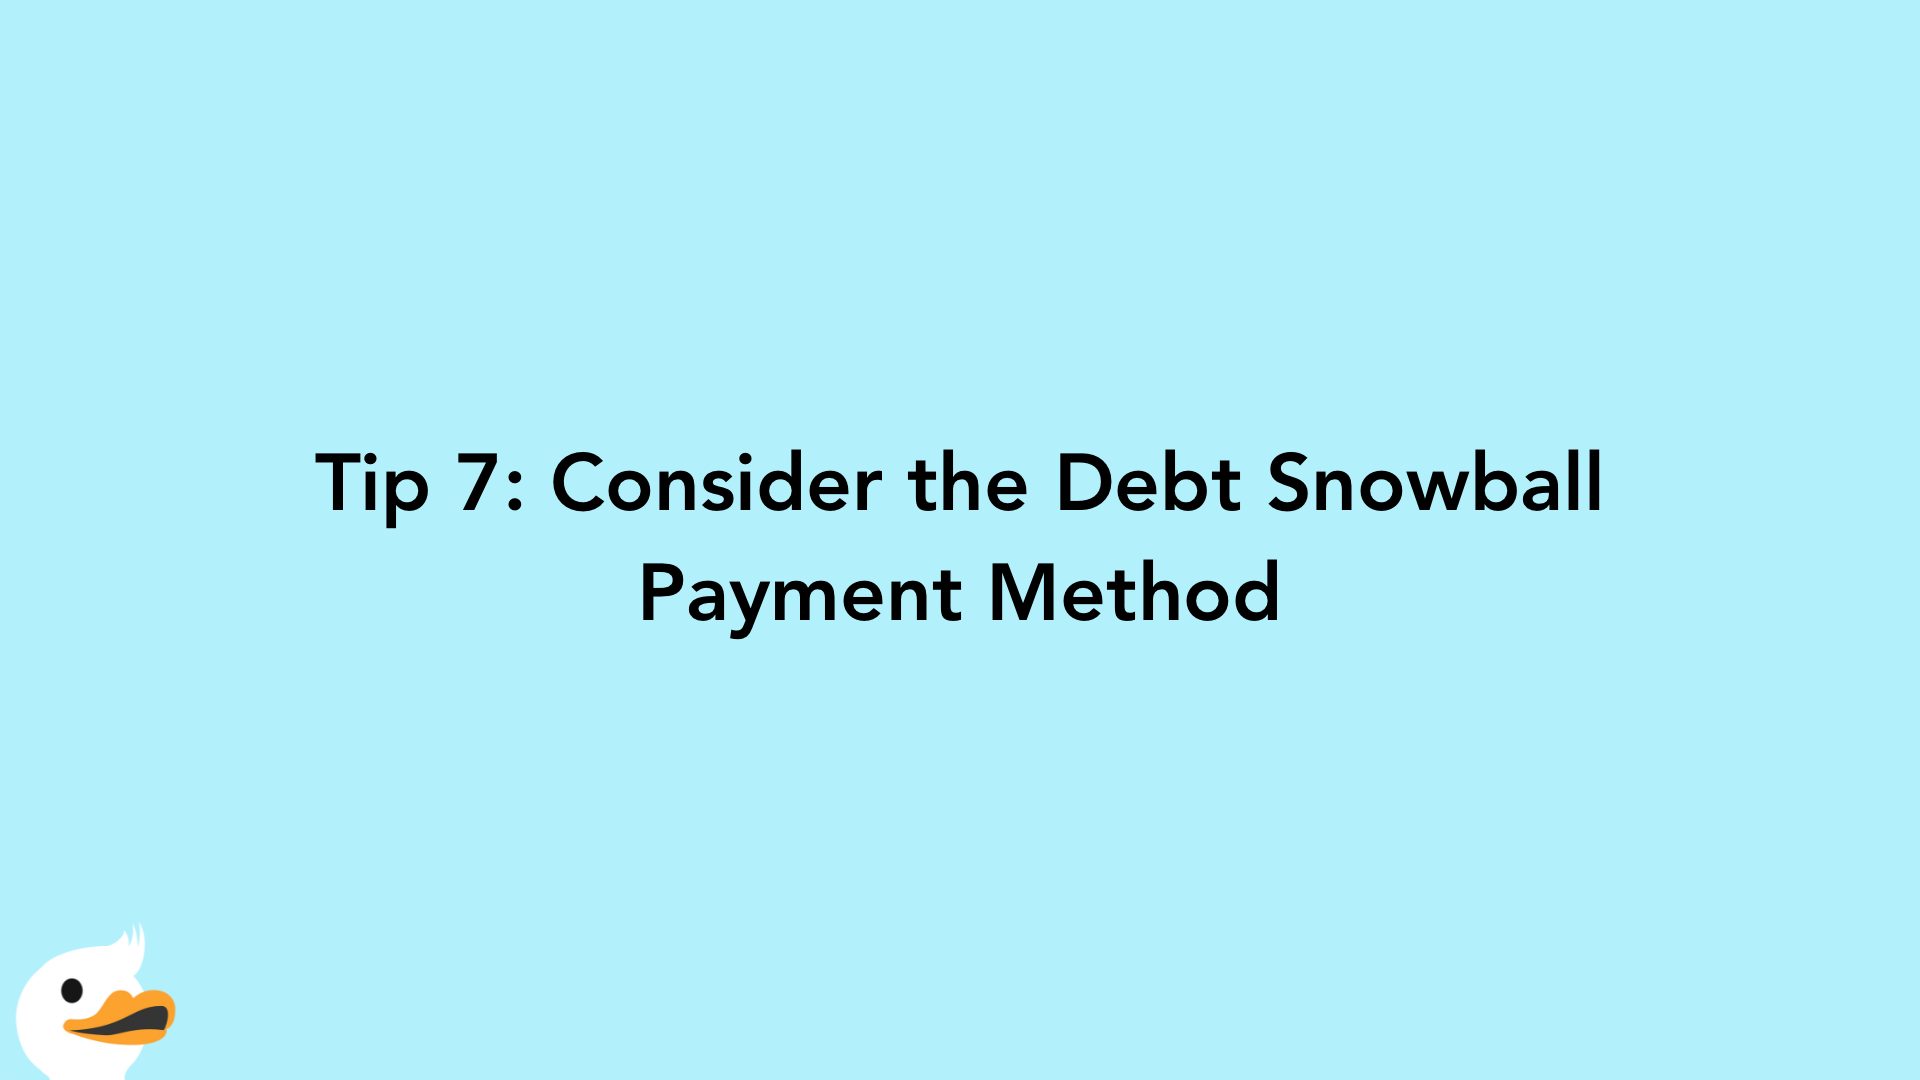 Tip 7: Consider the Debt Snowball Payment Method